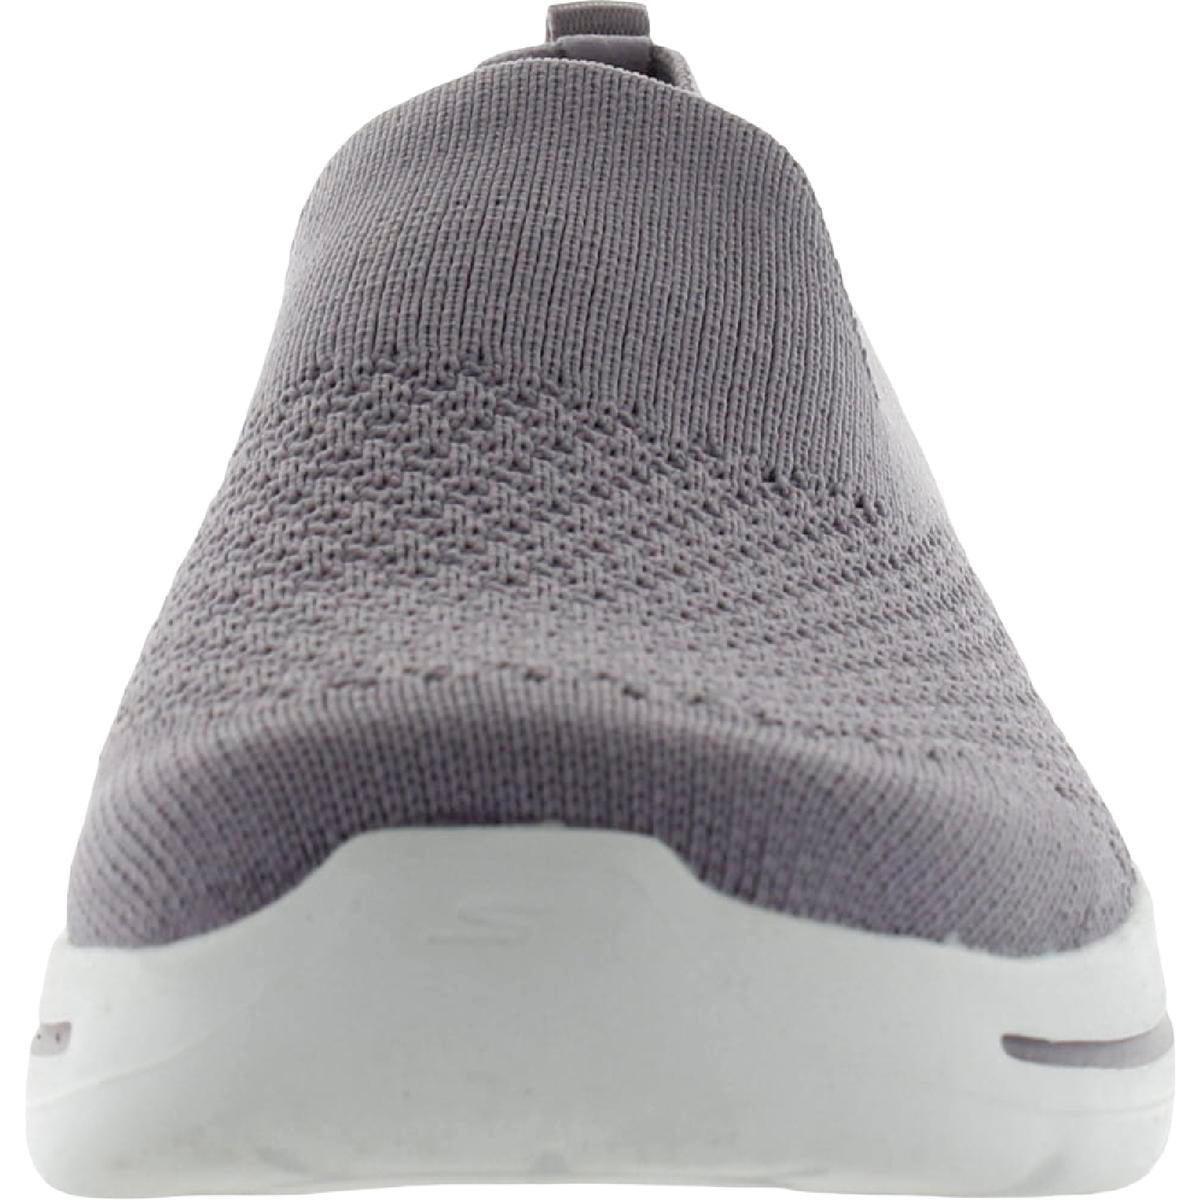 Skechers Go Walk Arch Fit - Delora Lifestyle Knit Slip-on Sneakers in Gray  | Lyst